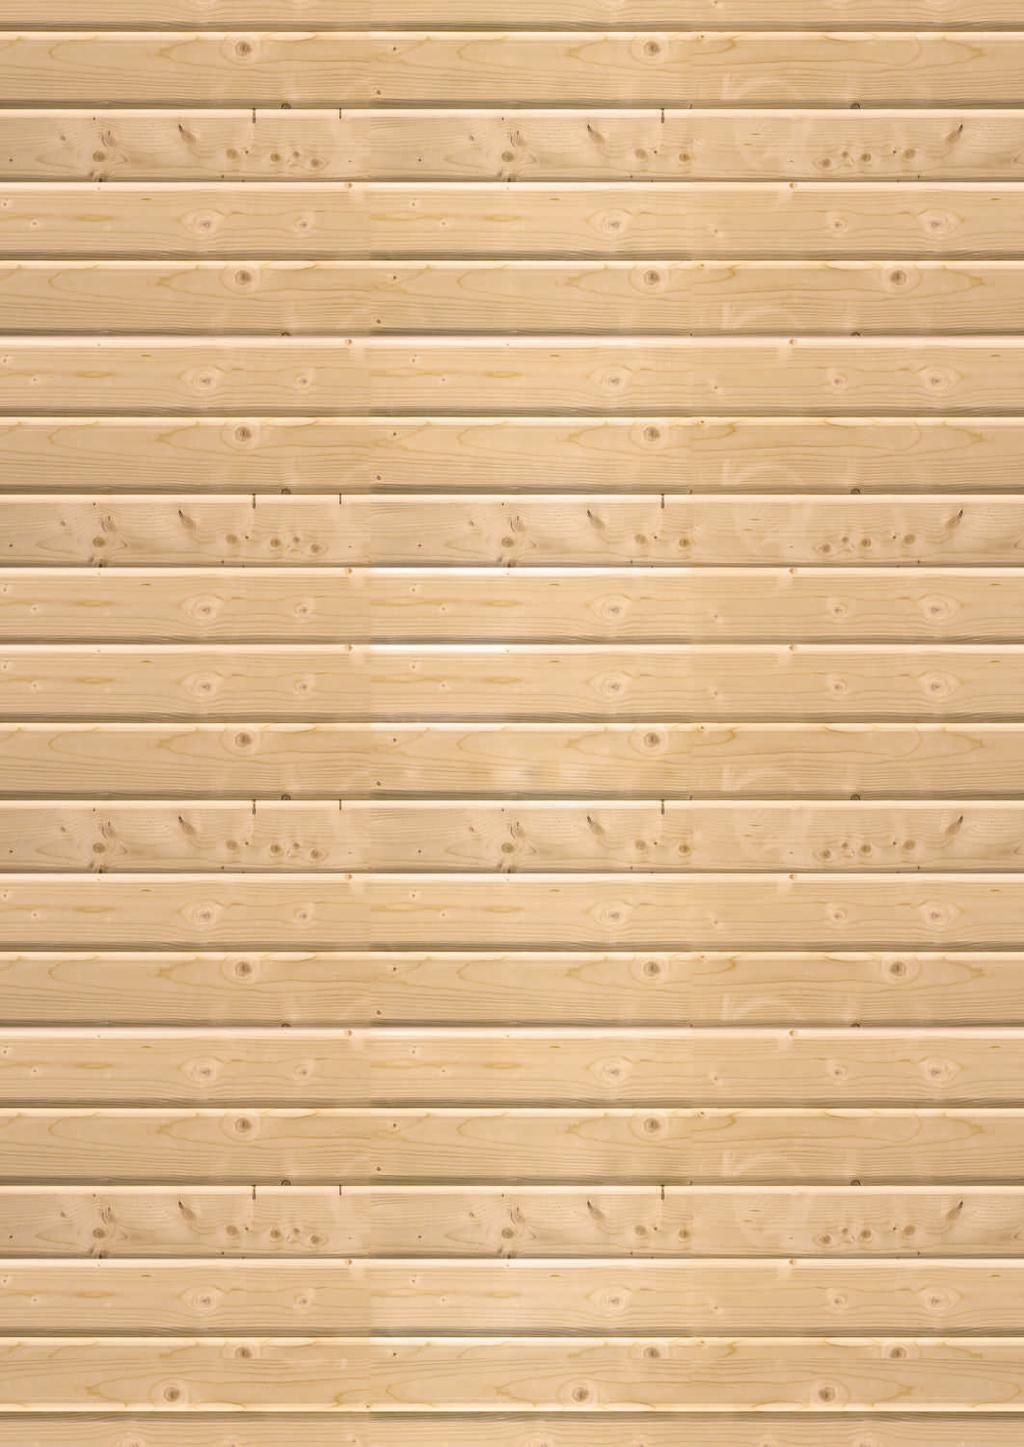 SOMMERAKTION: ECO Flachdach Carport Flachdach Carport (304 x 490 x 229 cm) 9x9er Pfosten, Dacheindeckung aus 0,8 mm PVC Platten grau Inkl